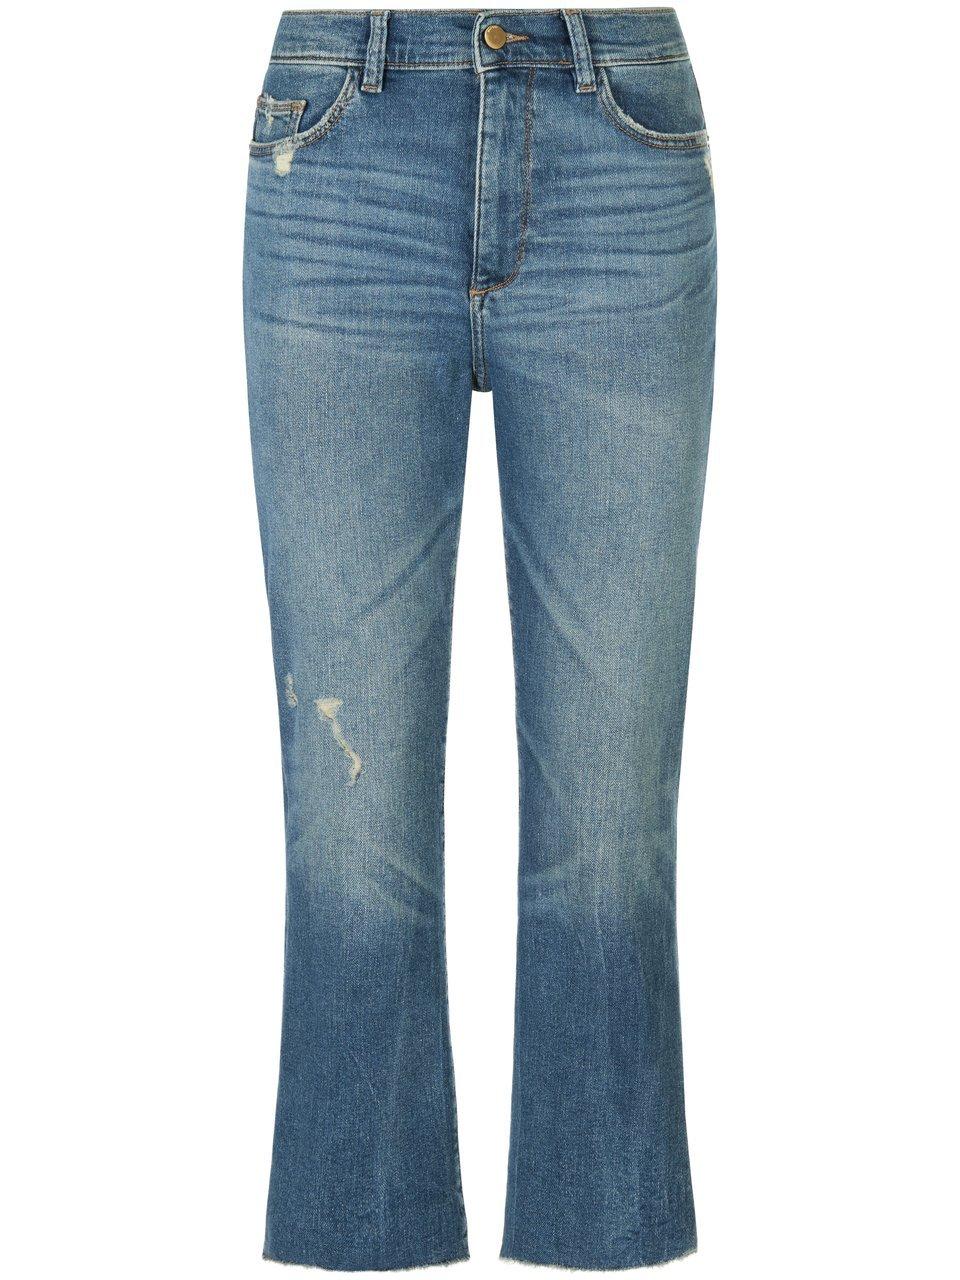 Jeans Van DL1961 denim